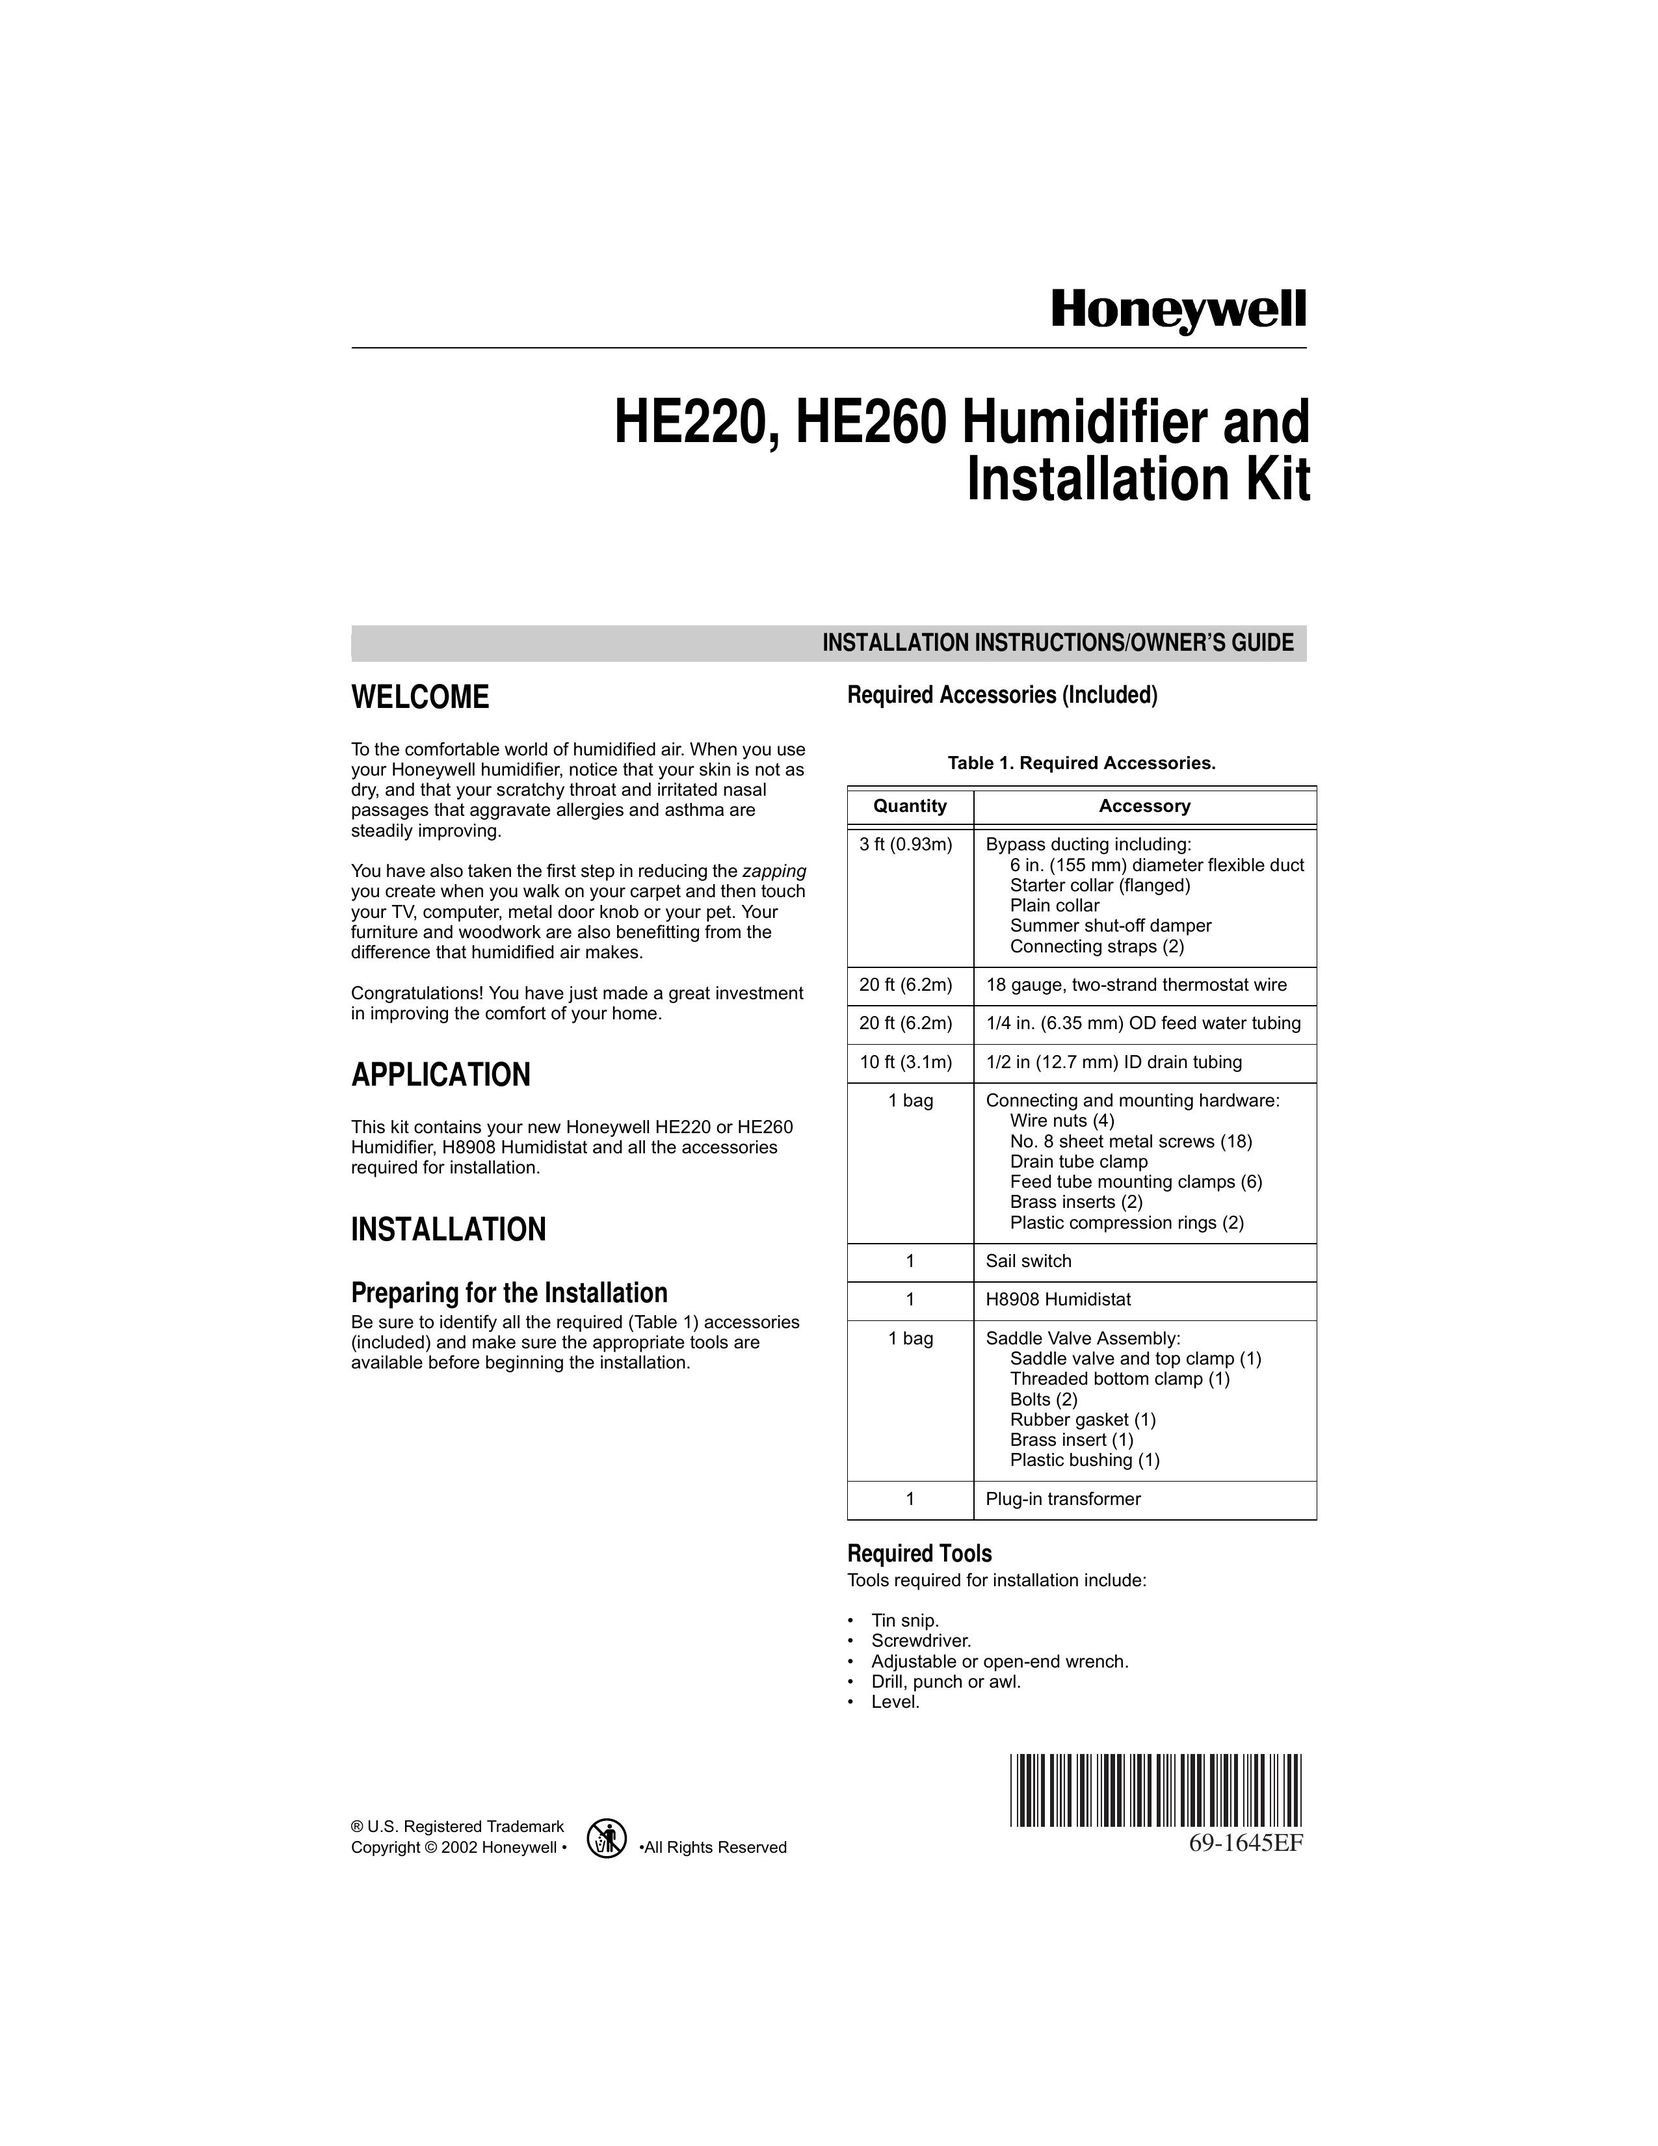 Honeywell HE220 Humidifier User Manual